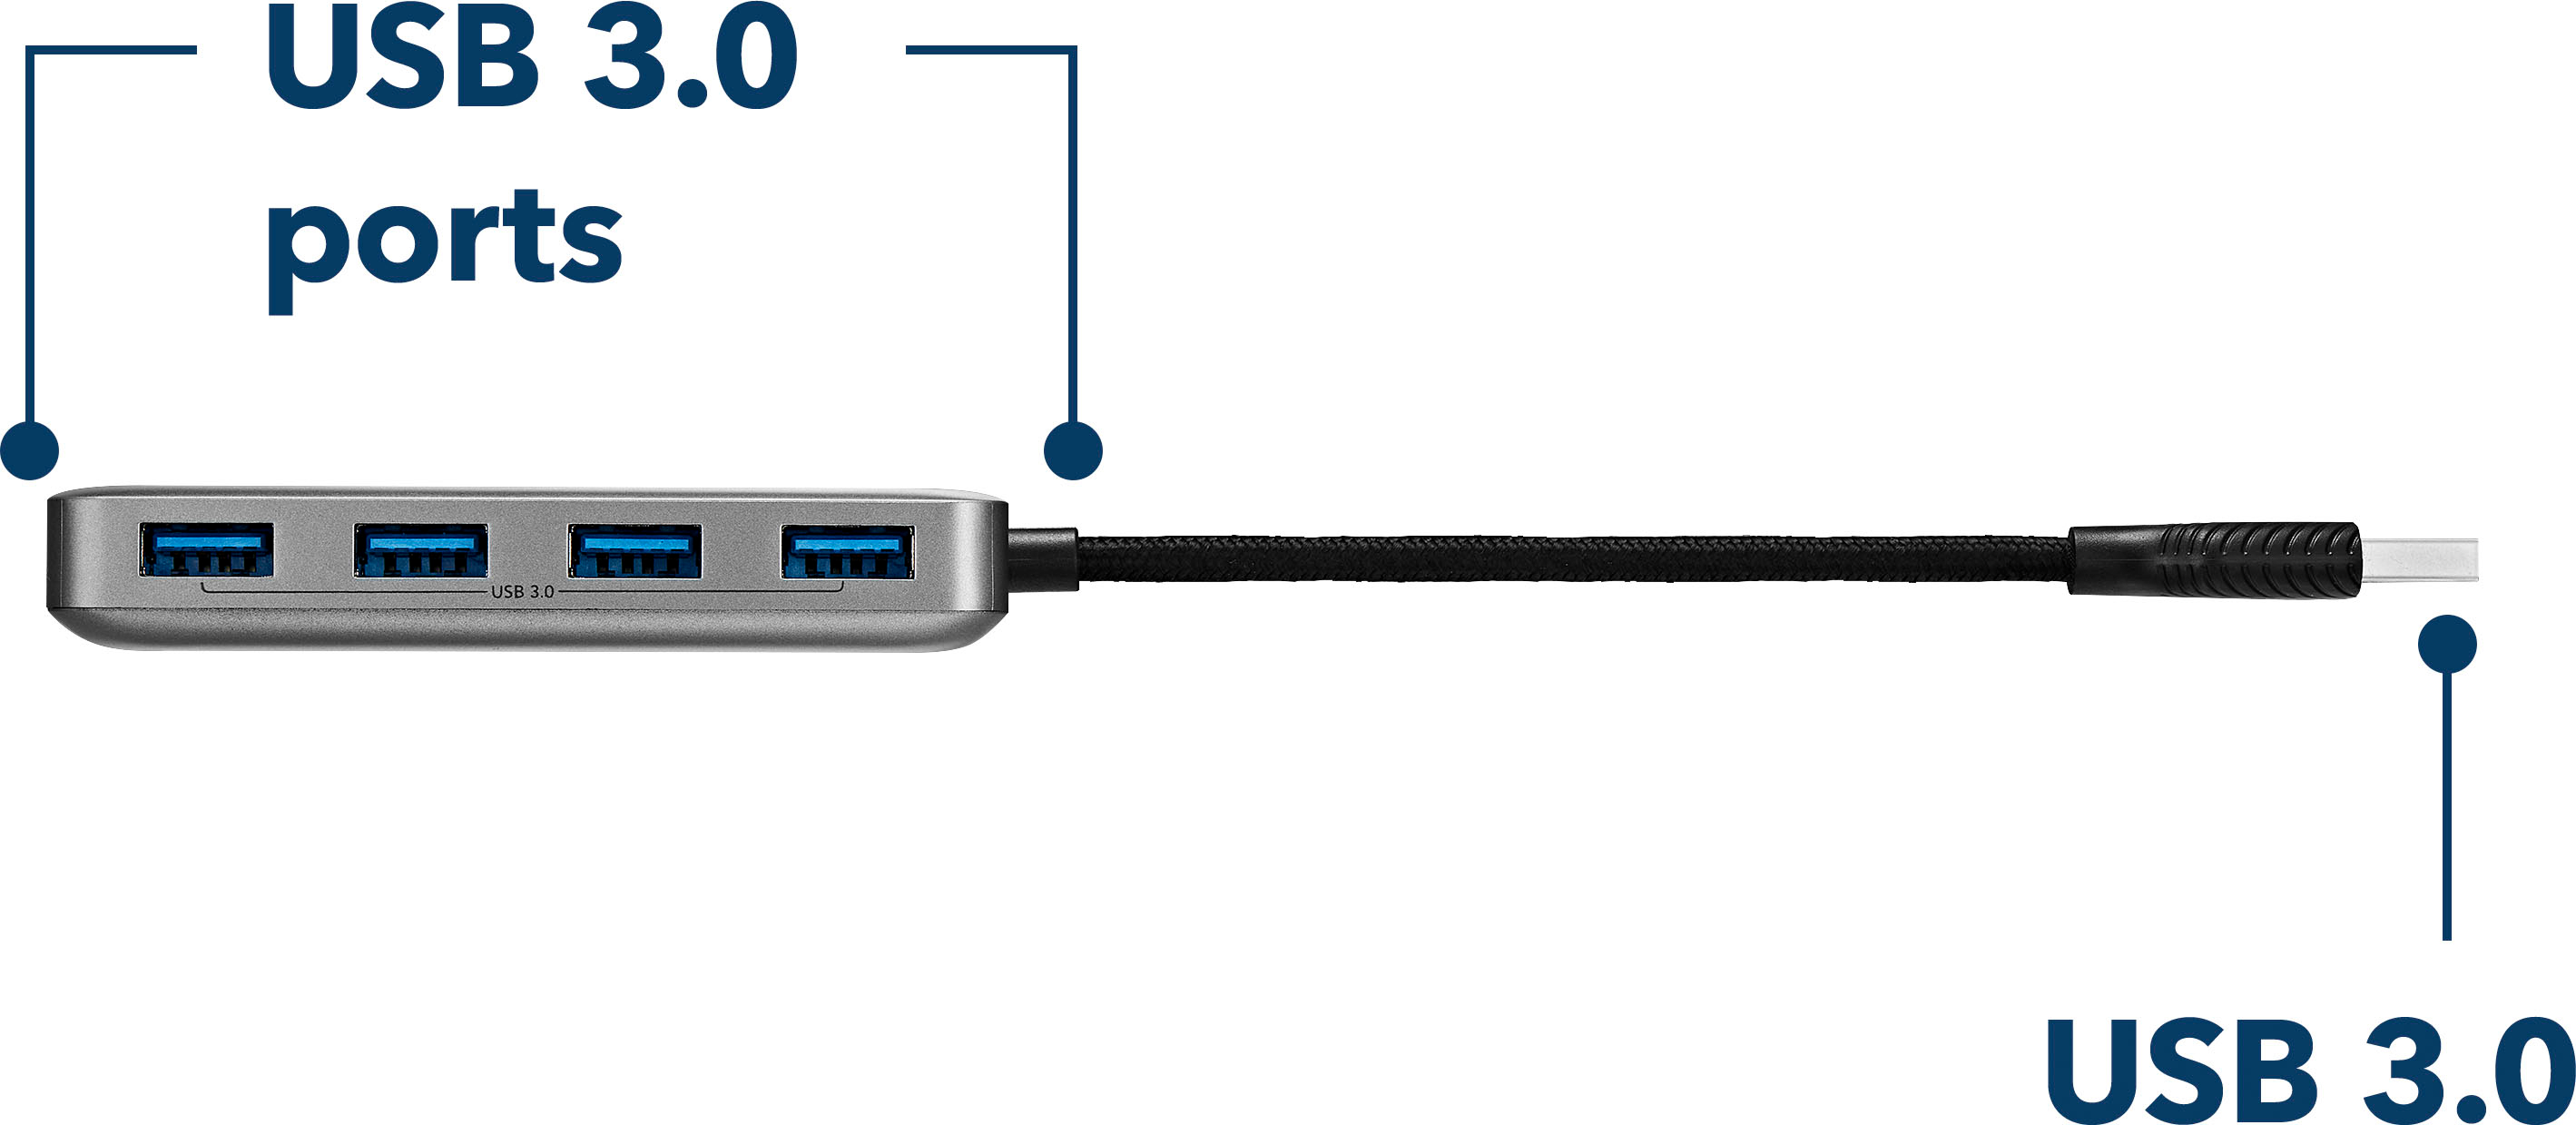 Best Buy: Insignia™ 5-Port USB Hub for PlayStation 4 Black NS